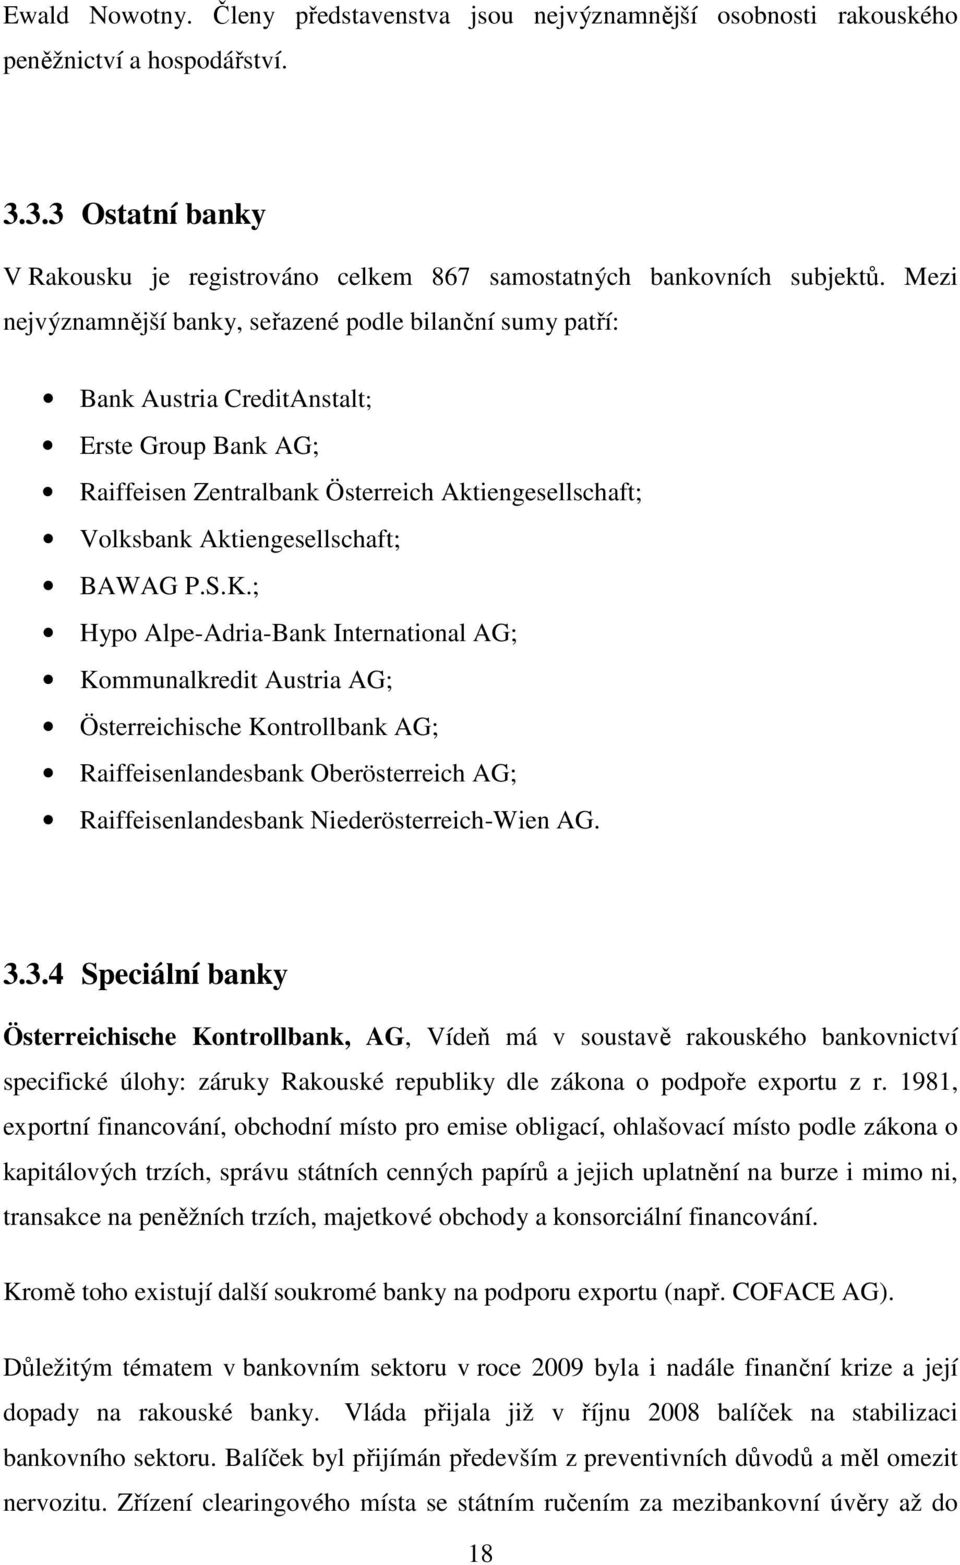 BAWAG P.S.K.; Hypo Alpe-Adria-Bank International AG; Kommunalkredit Austria AG; Österreichische Kontrollbank AG; Raiffeisenlandesbank Oberösterreich AG; Raiffeisenlandesbank Niederösterreich-Wien AG.